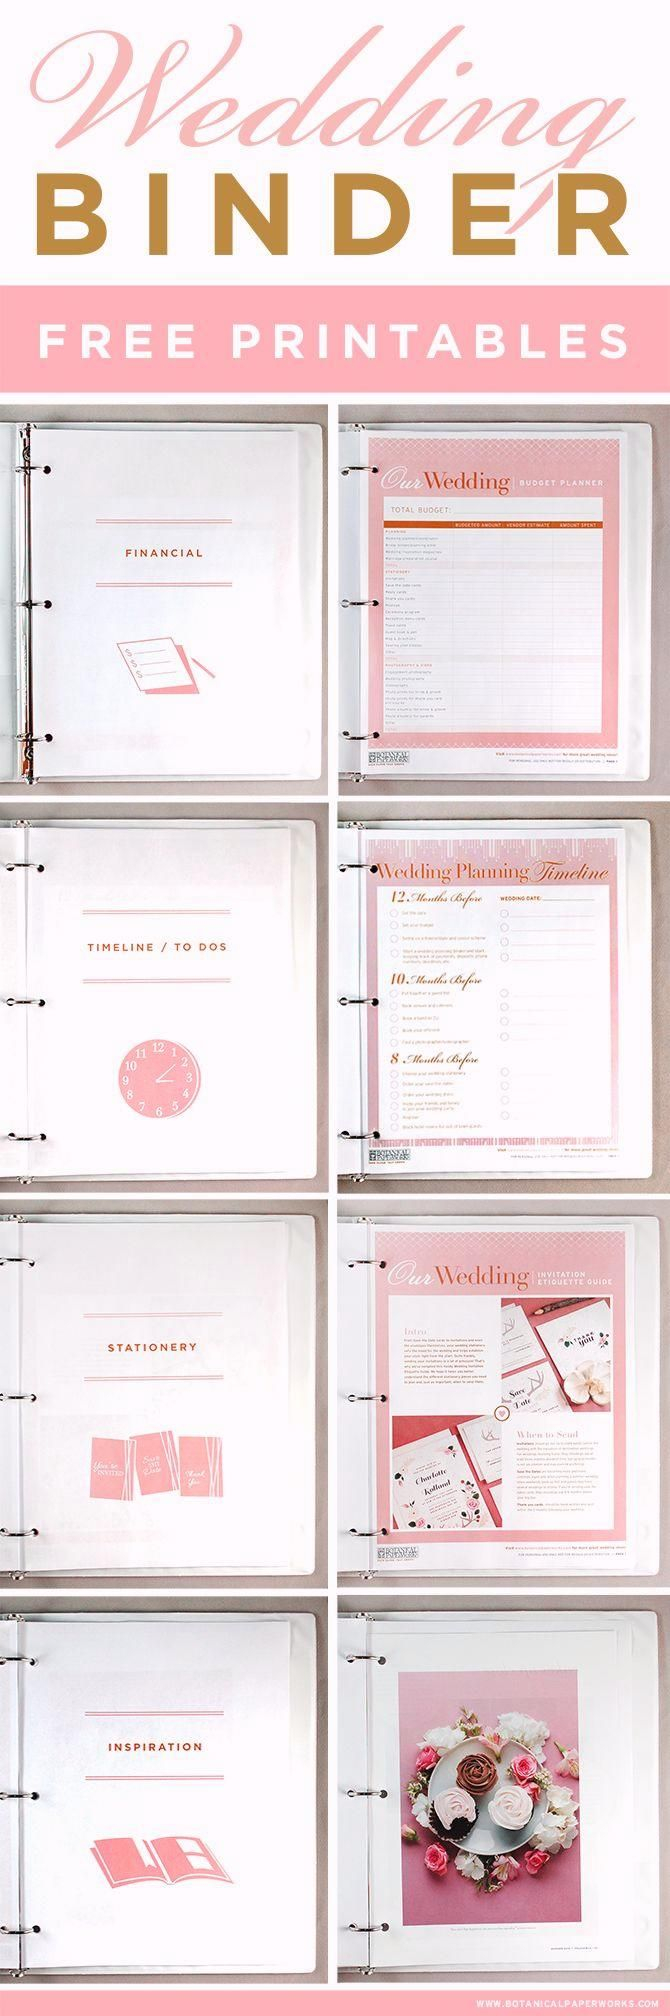 free Printables Wedding Planning Binder Botanical PaperWorks En